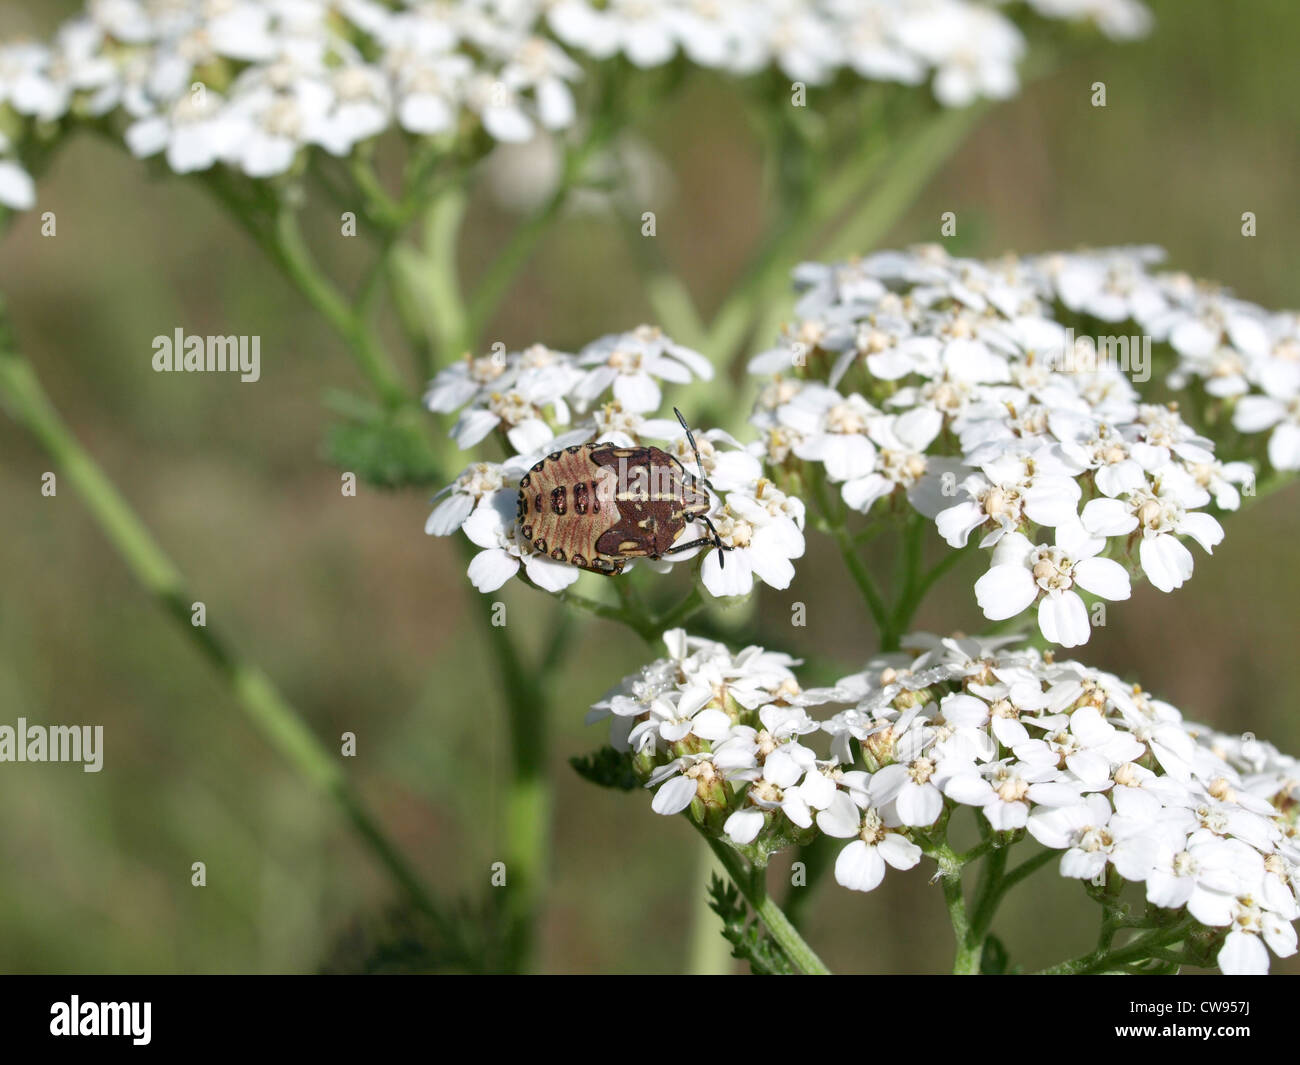 Carpocoris bug on a bloom / Carpocoris Wanze auf einer Blüte Stock Photo